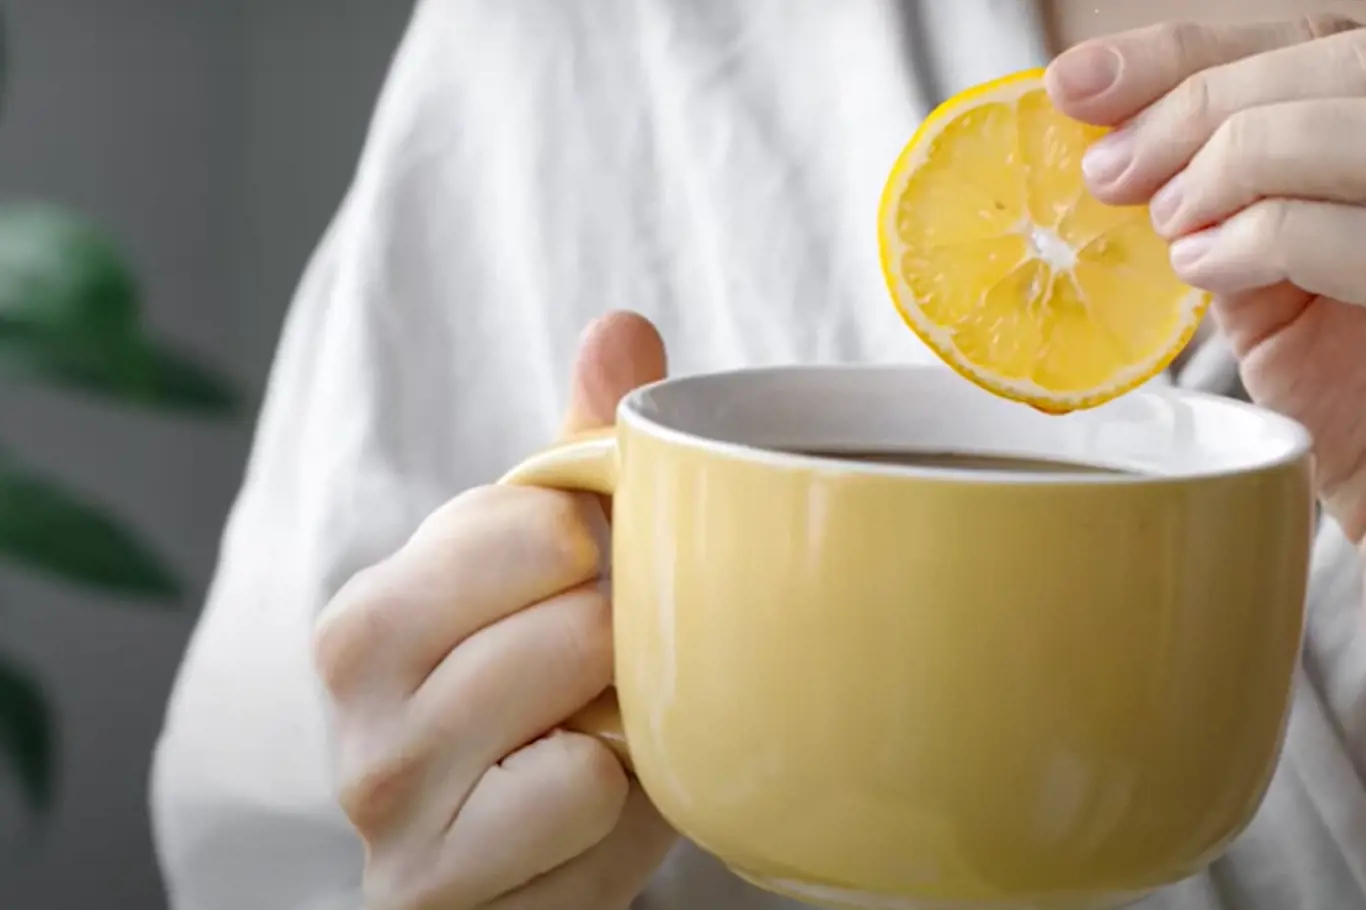 káva s citronem